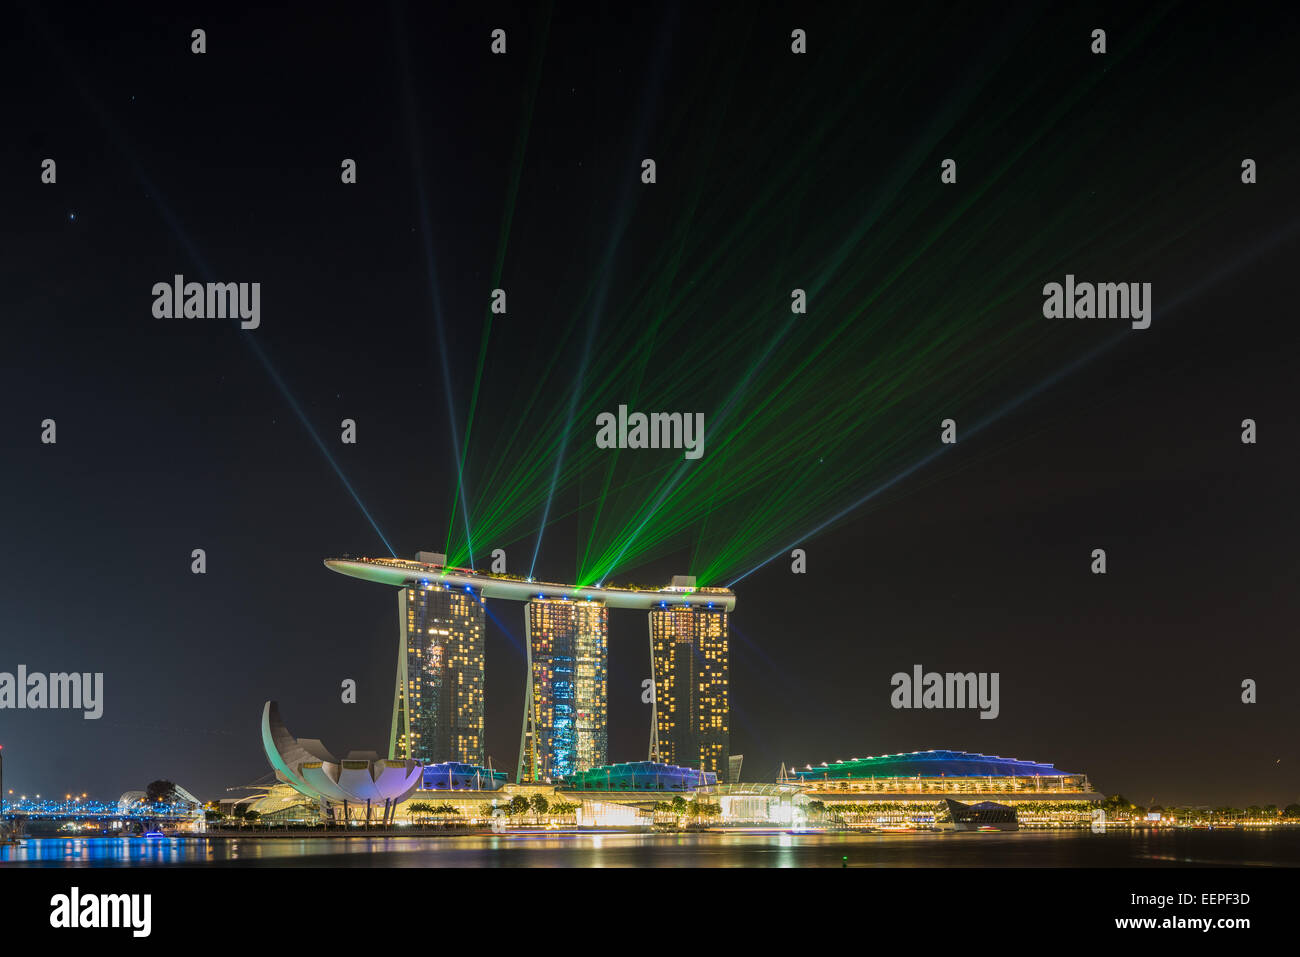 Marina Bay Sands Hotel and Casino, Singapore. Stock Photo